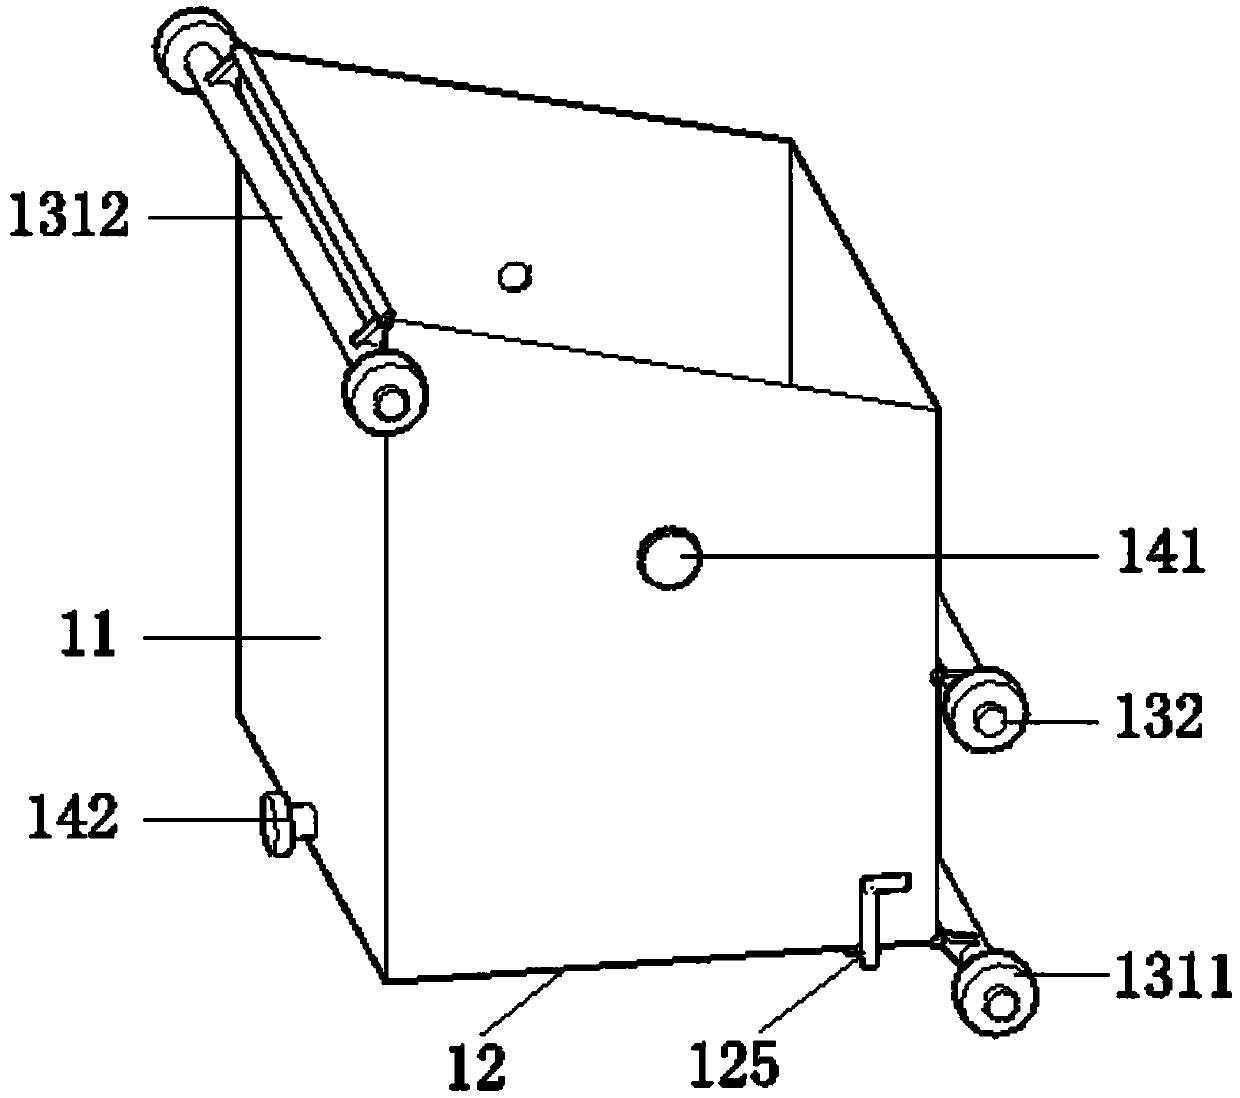 Automatic slag discharging device for rapid construction of subway and automatic slag discharging method